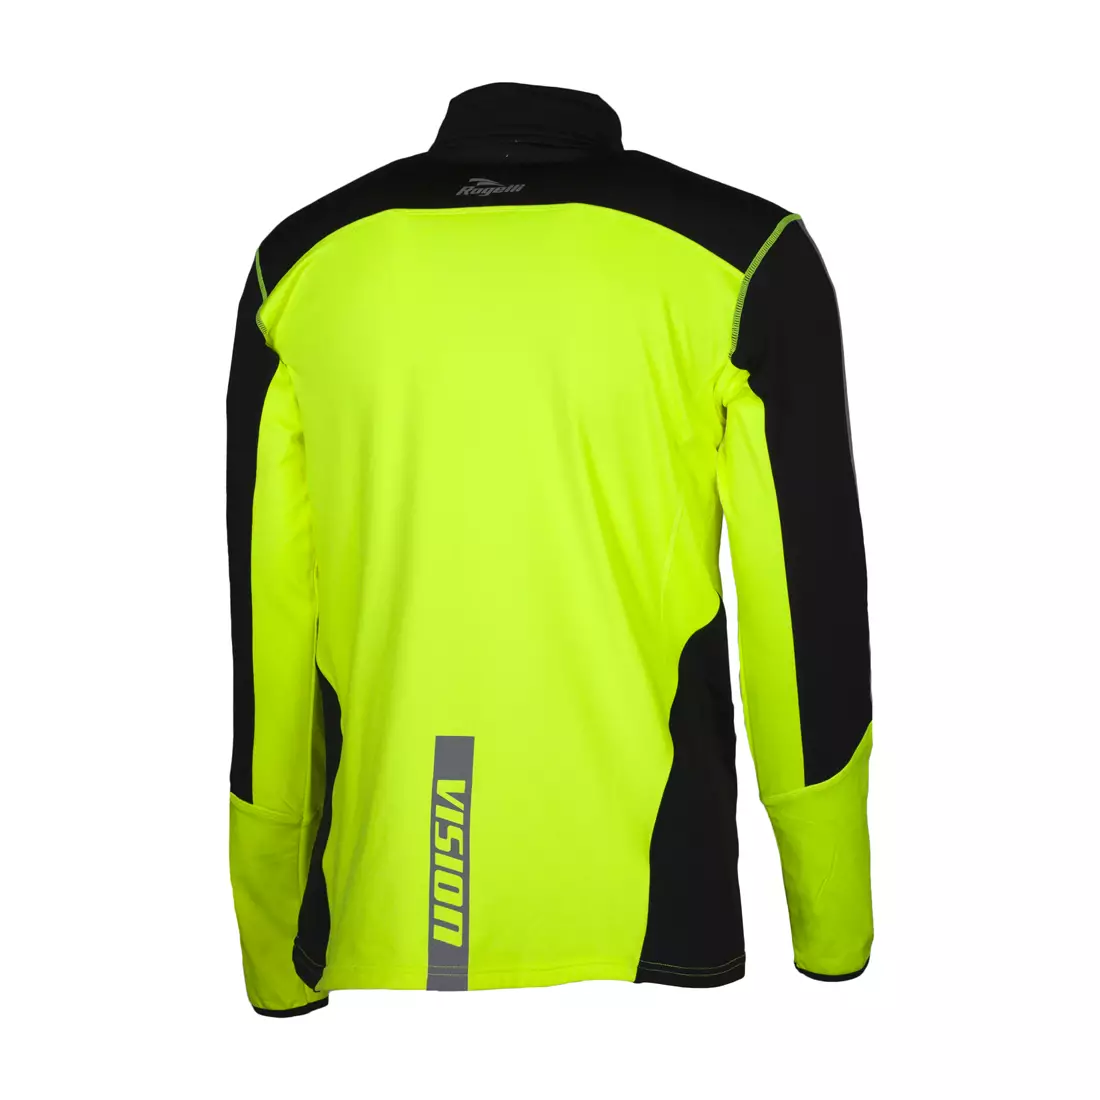 ROGELLI RUN GRAFTON 830.635 men's running sweatshirt, color: fluorine